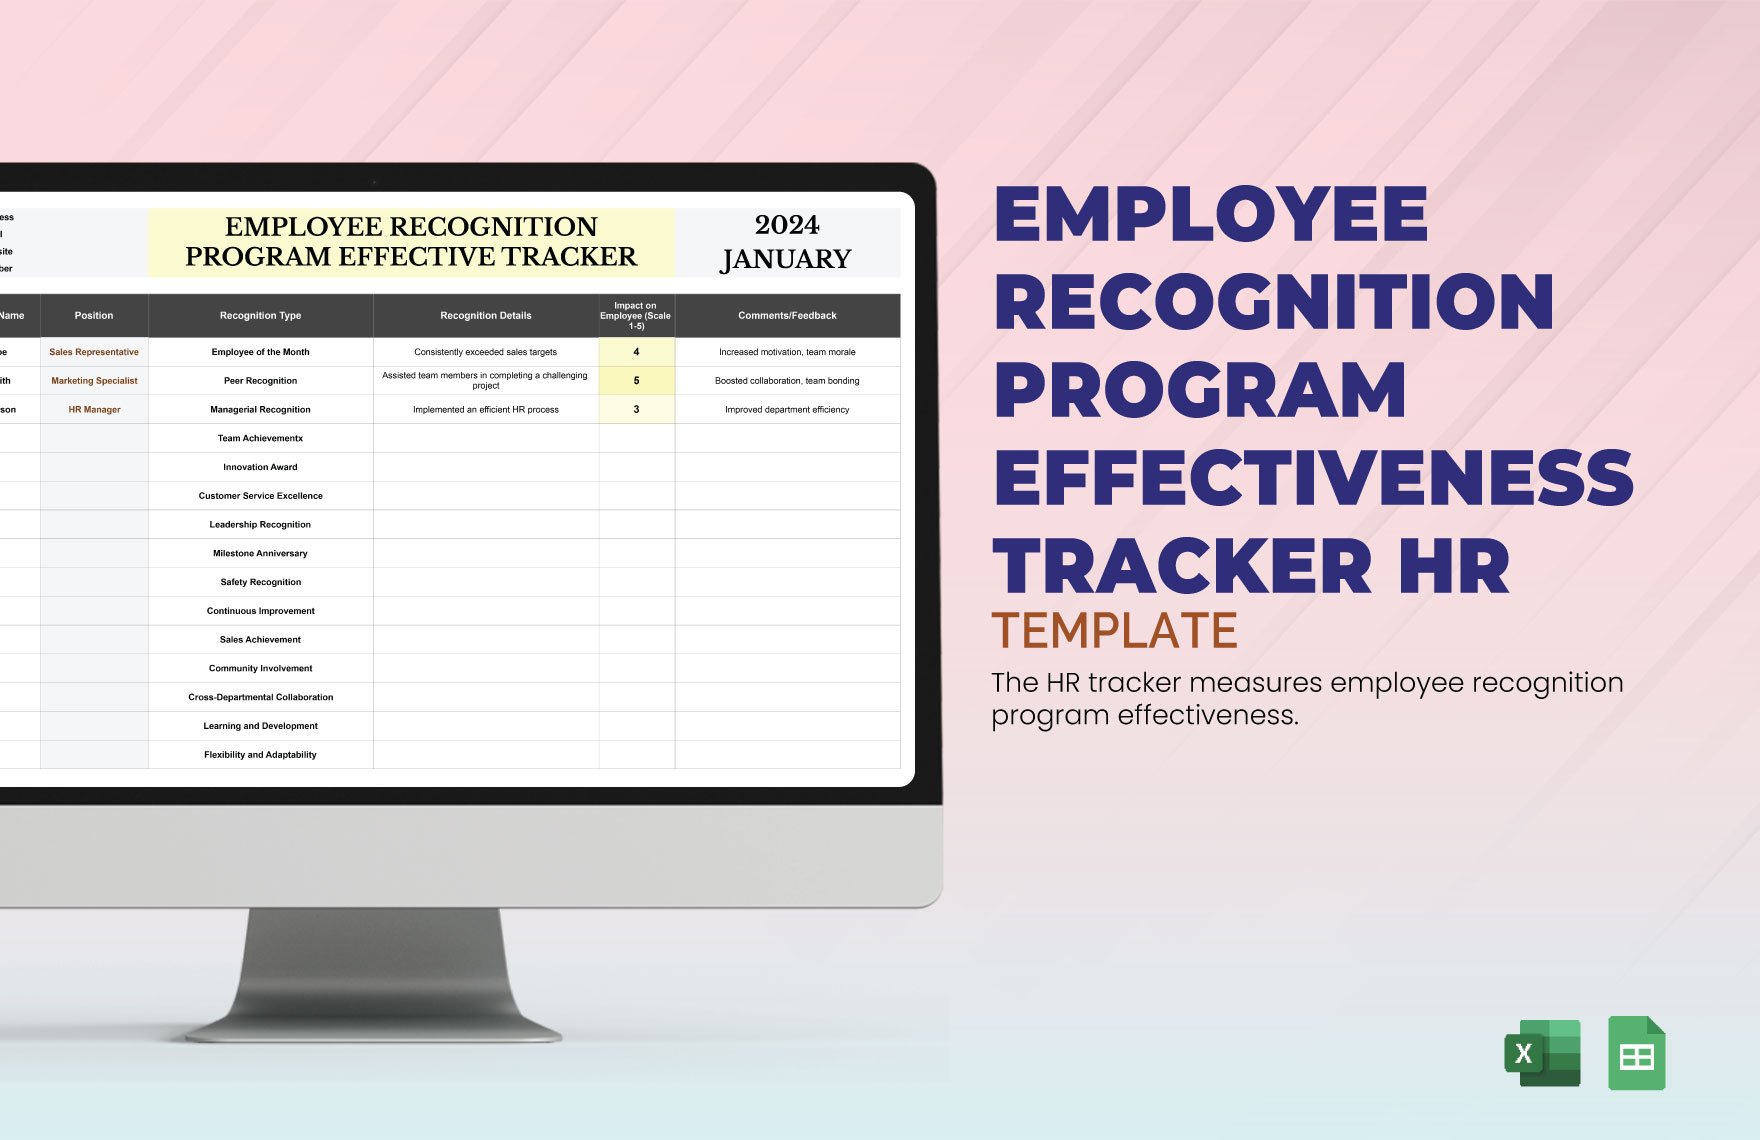 Employee Recognition Program Effectiveness Tracker HR Template